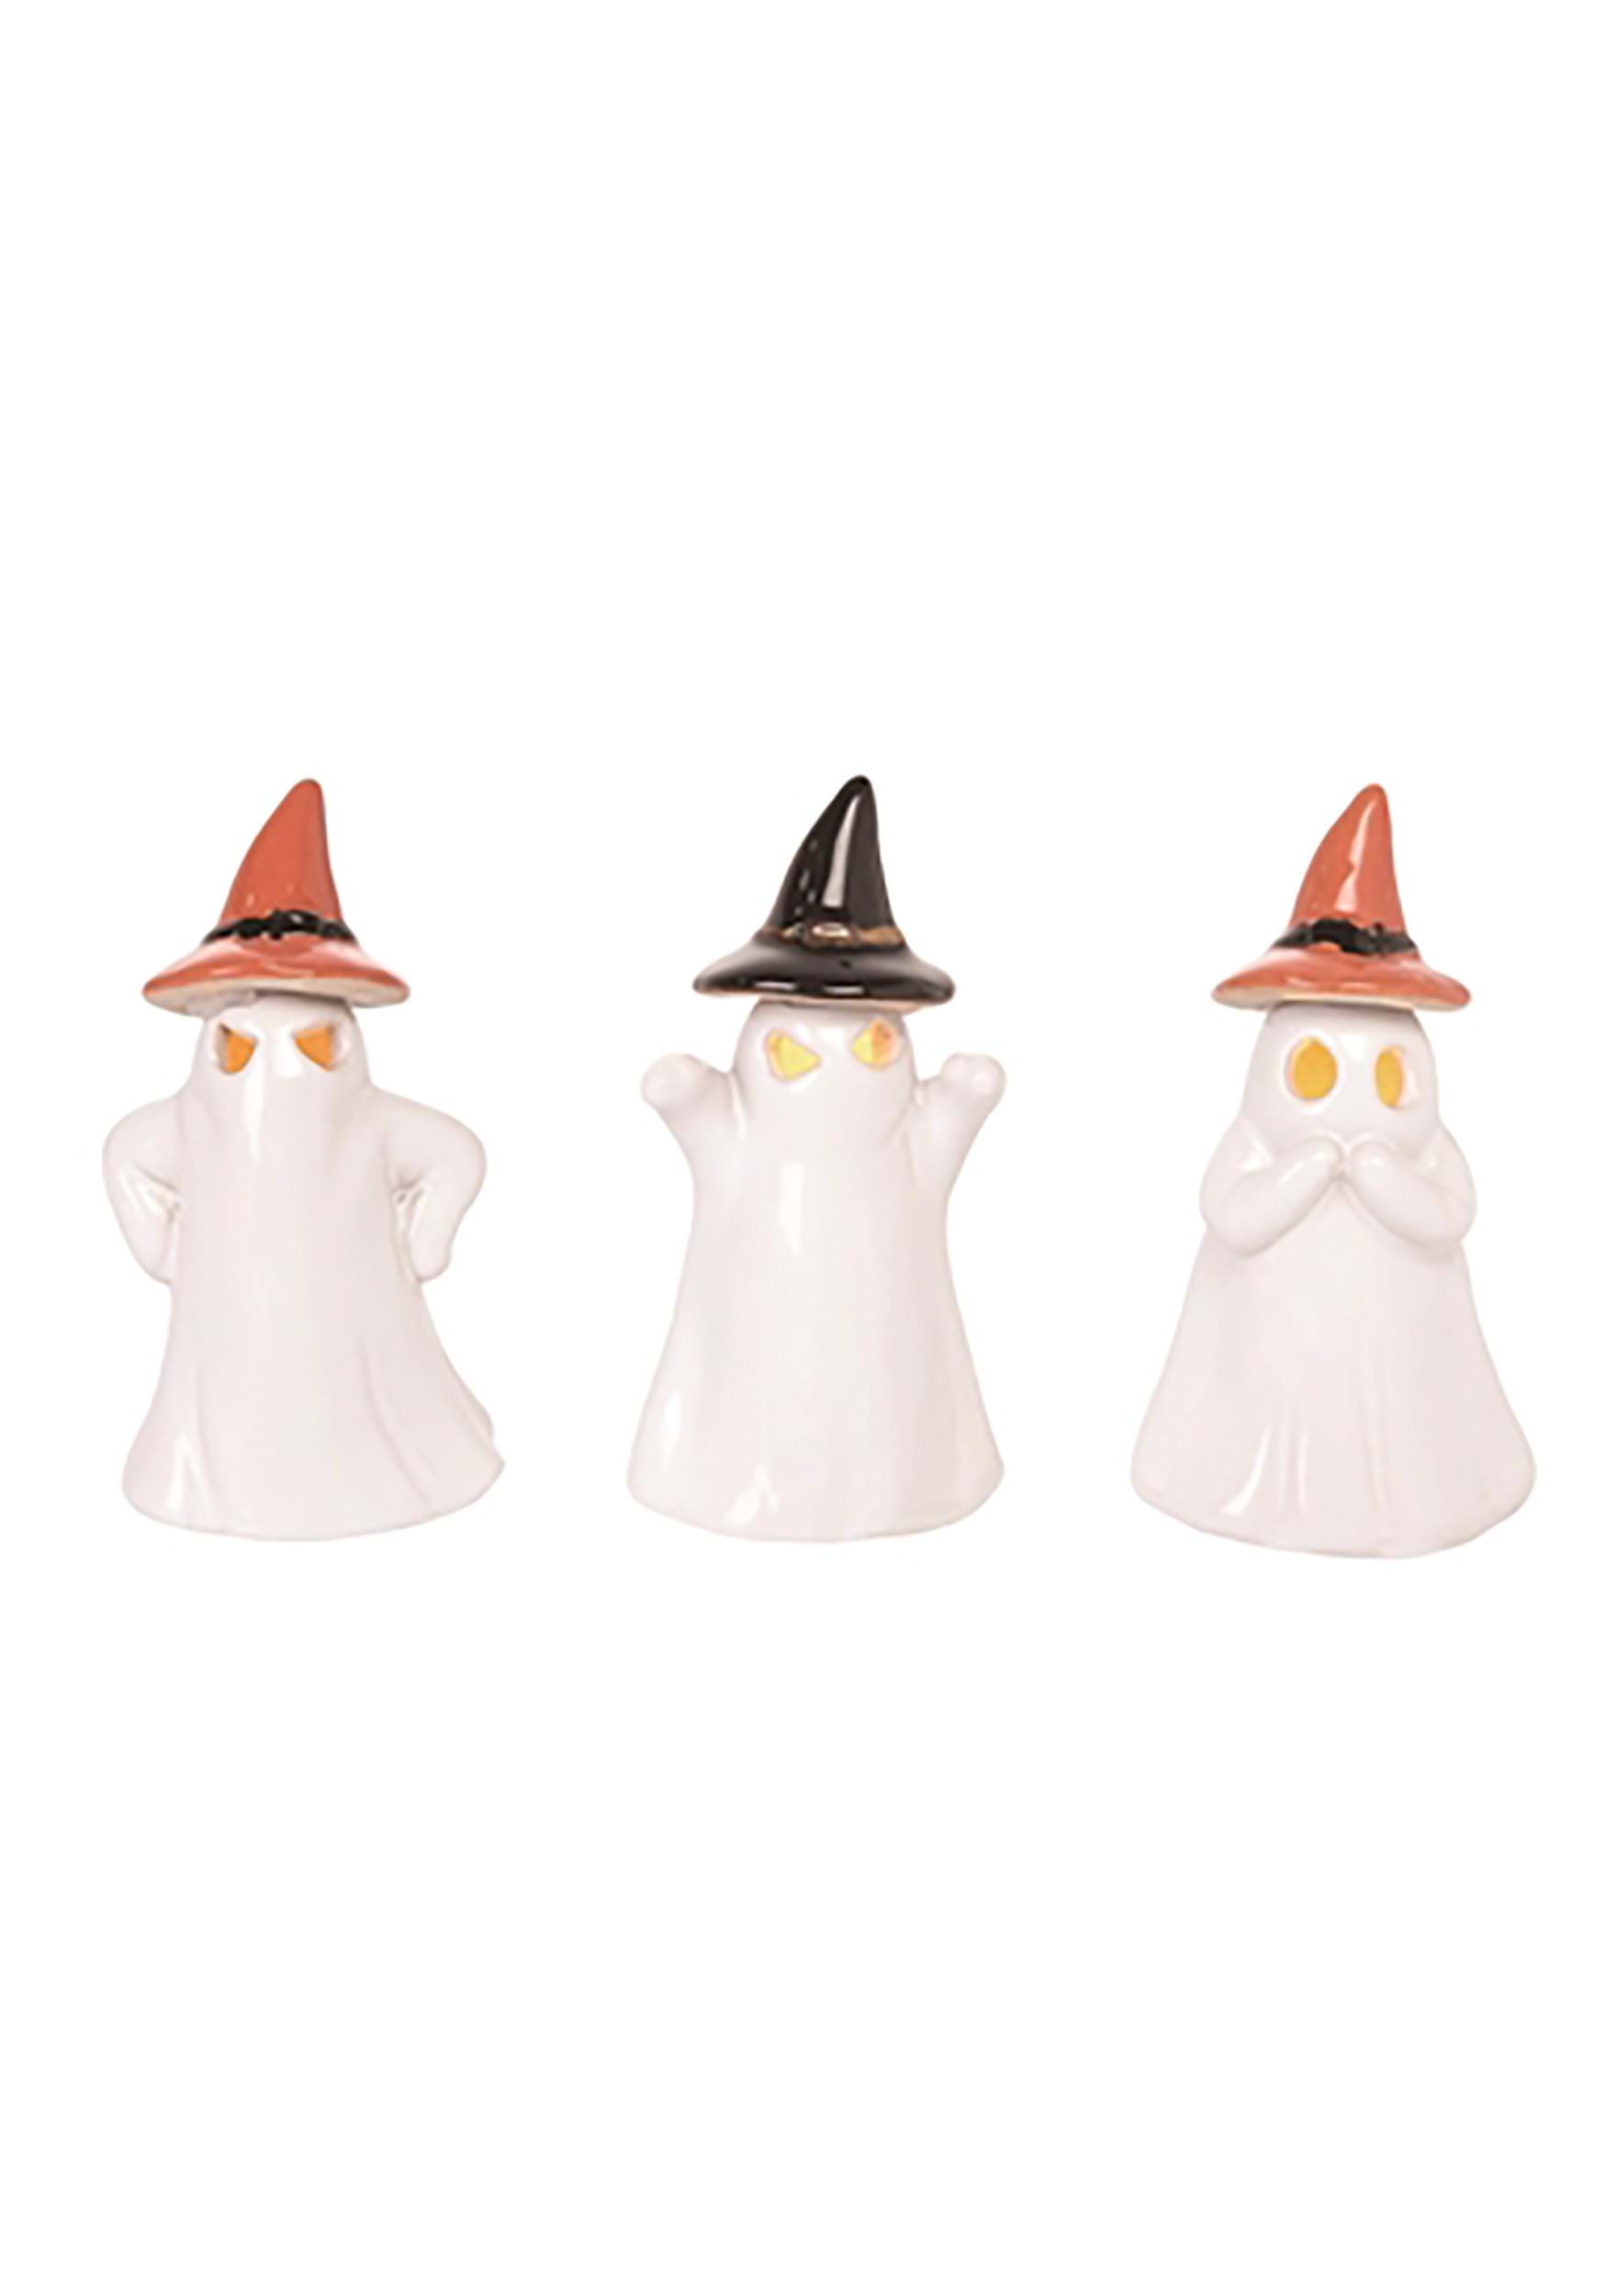 4″ Ceramic Light Up Ghost Figures Set